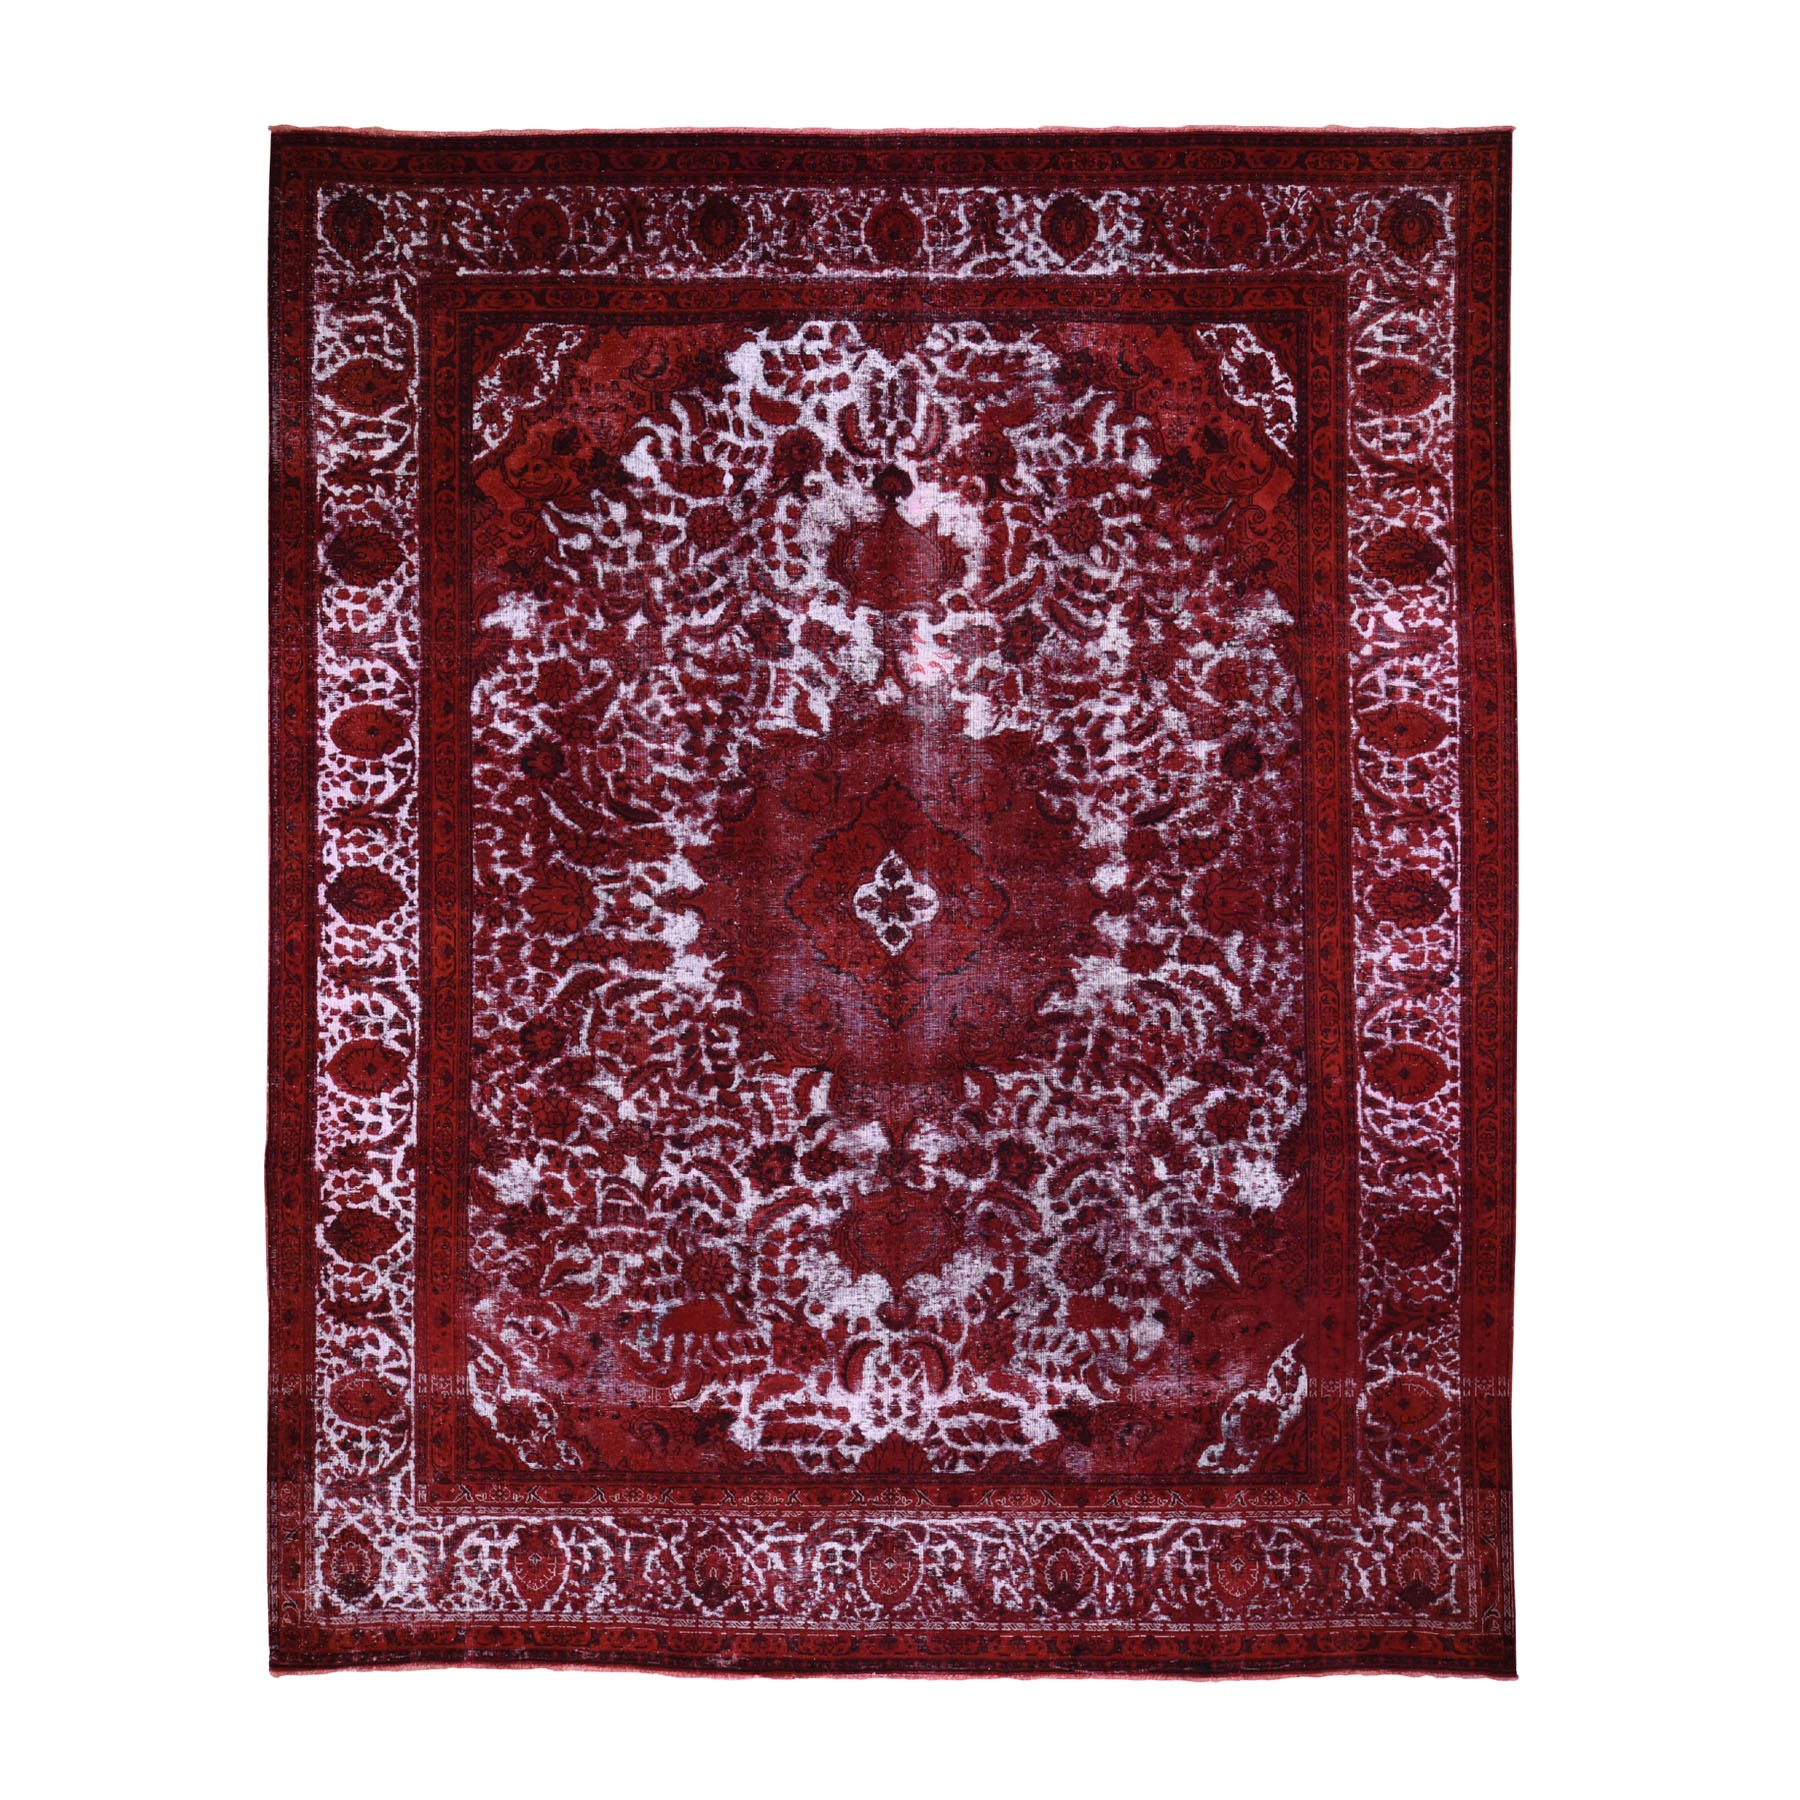 10'x12'5" Pure Wool Red Overdyed Persian Tabriz Barjasta Vintage Rug 